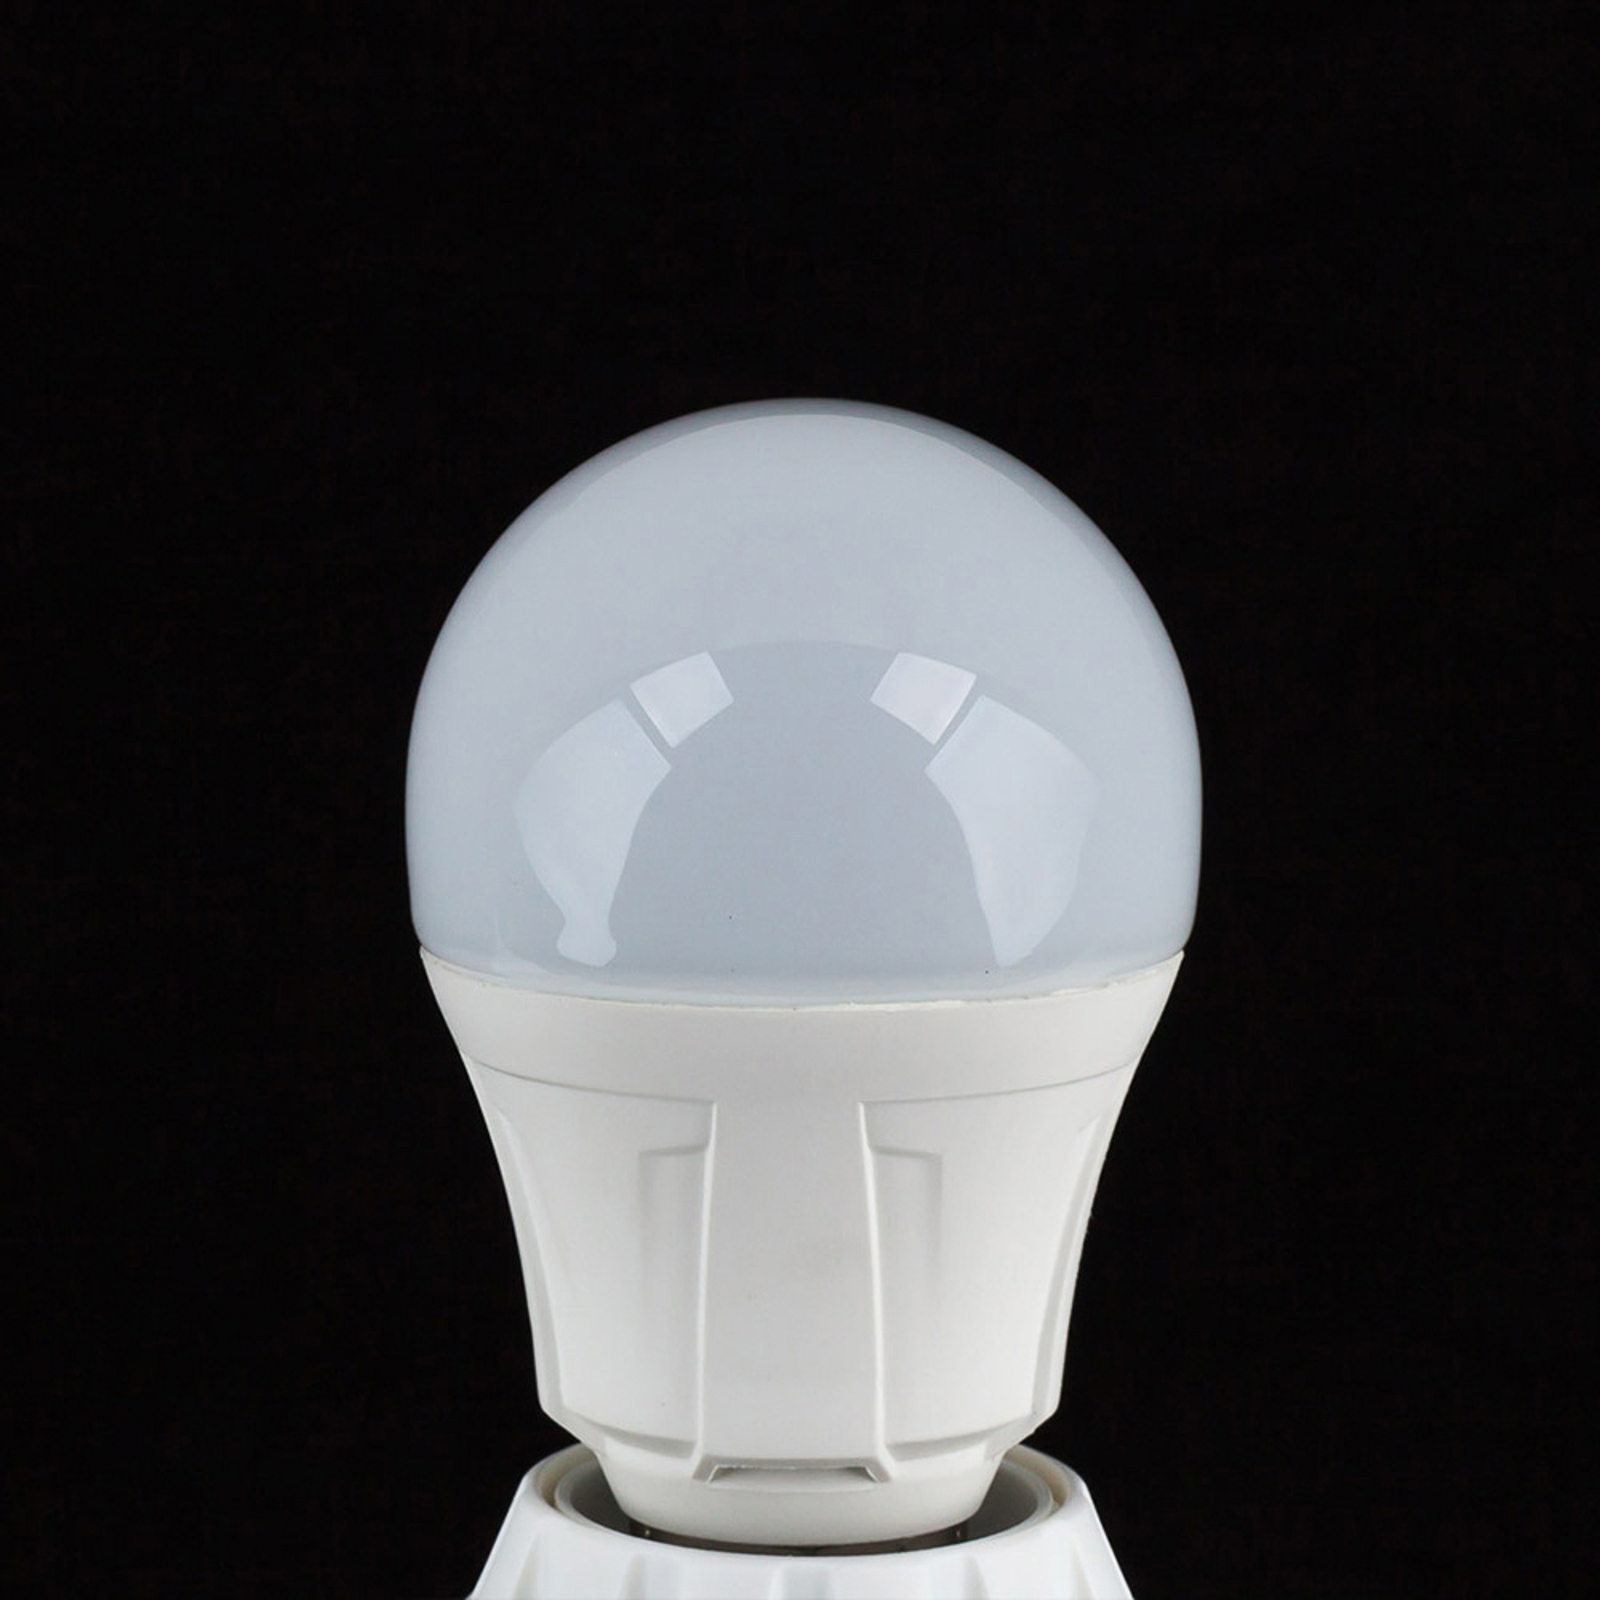 Ampoule LED incandescence E27 11 W 830 x3